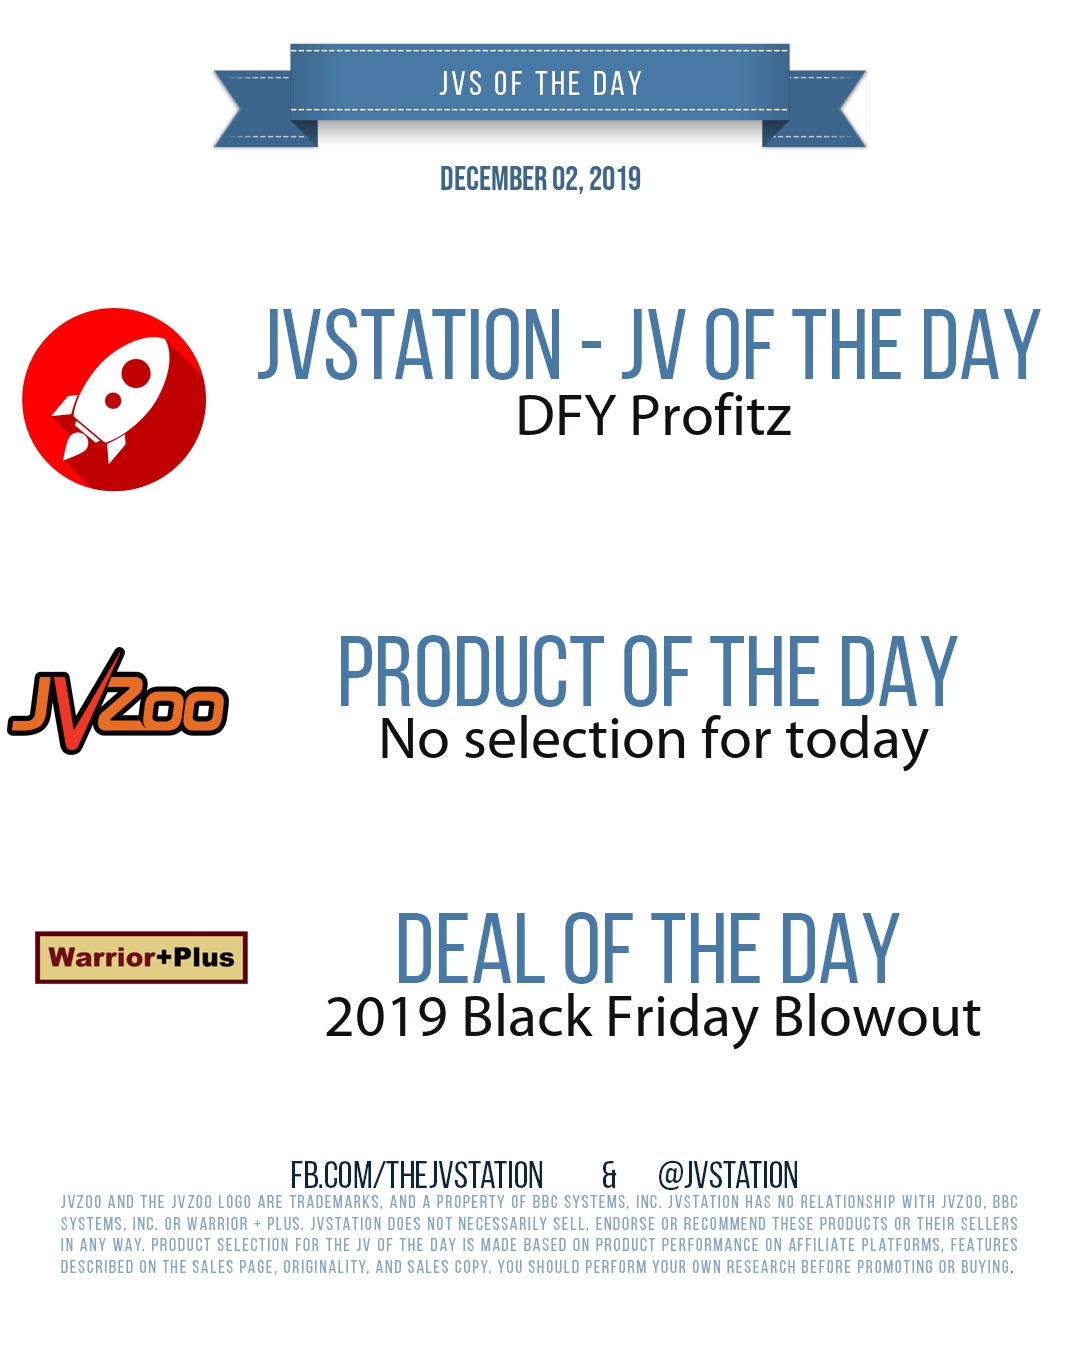 JVs of the day - December 02, 2019